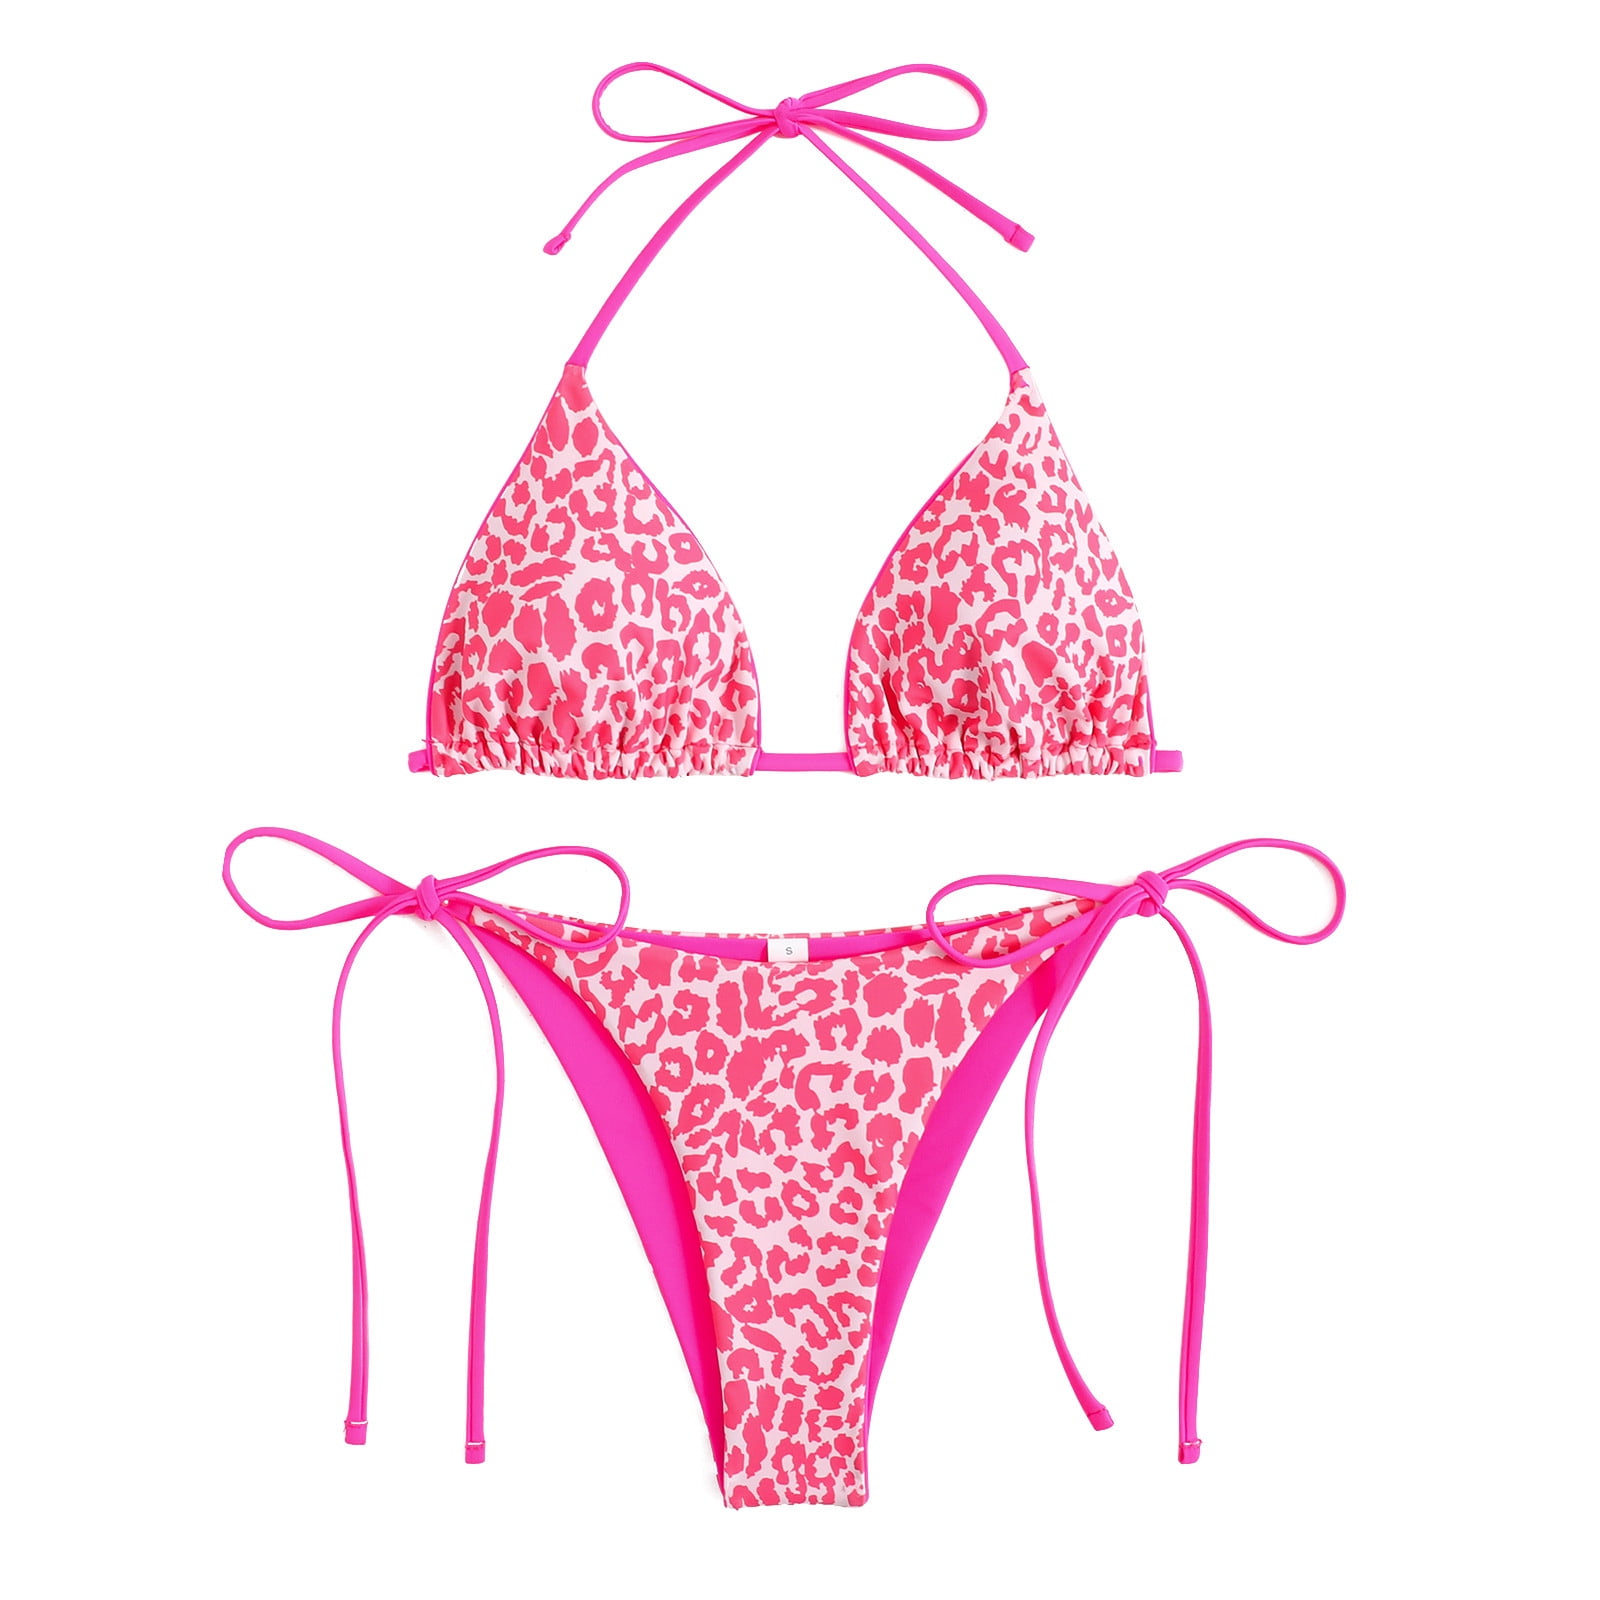 RQYYD Reduced Two Piece Swimsuit Bathing Women\'s Triangle String Set Bikini Pink,L) Tie Suits Bikini Side Leopard Bottom(Hot